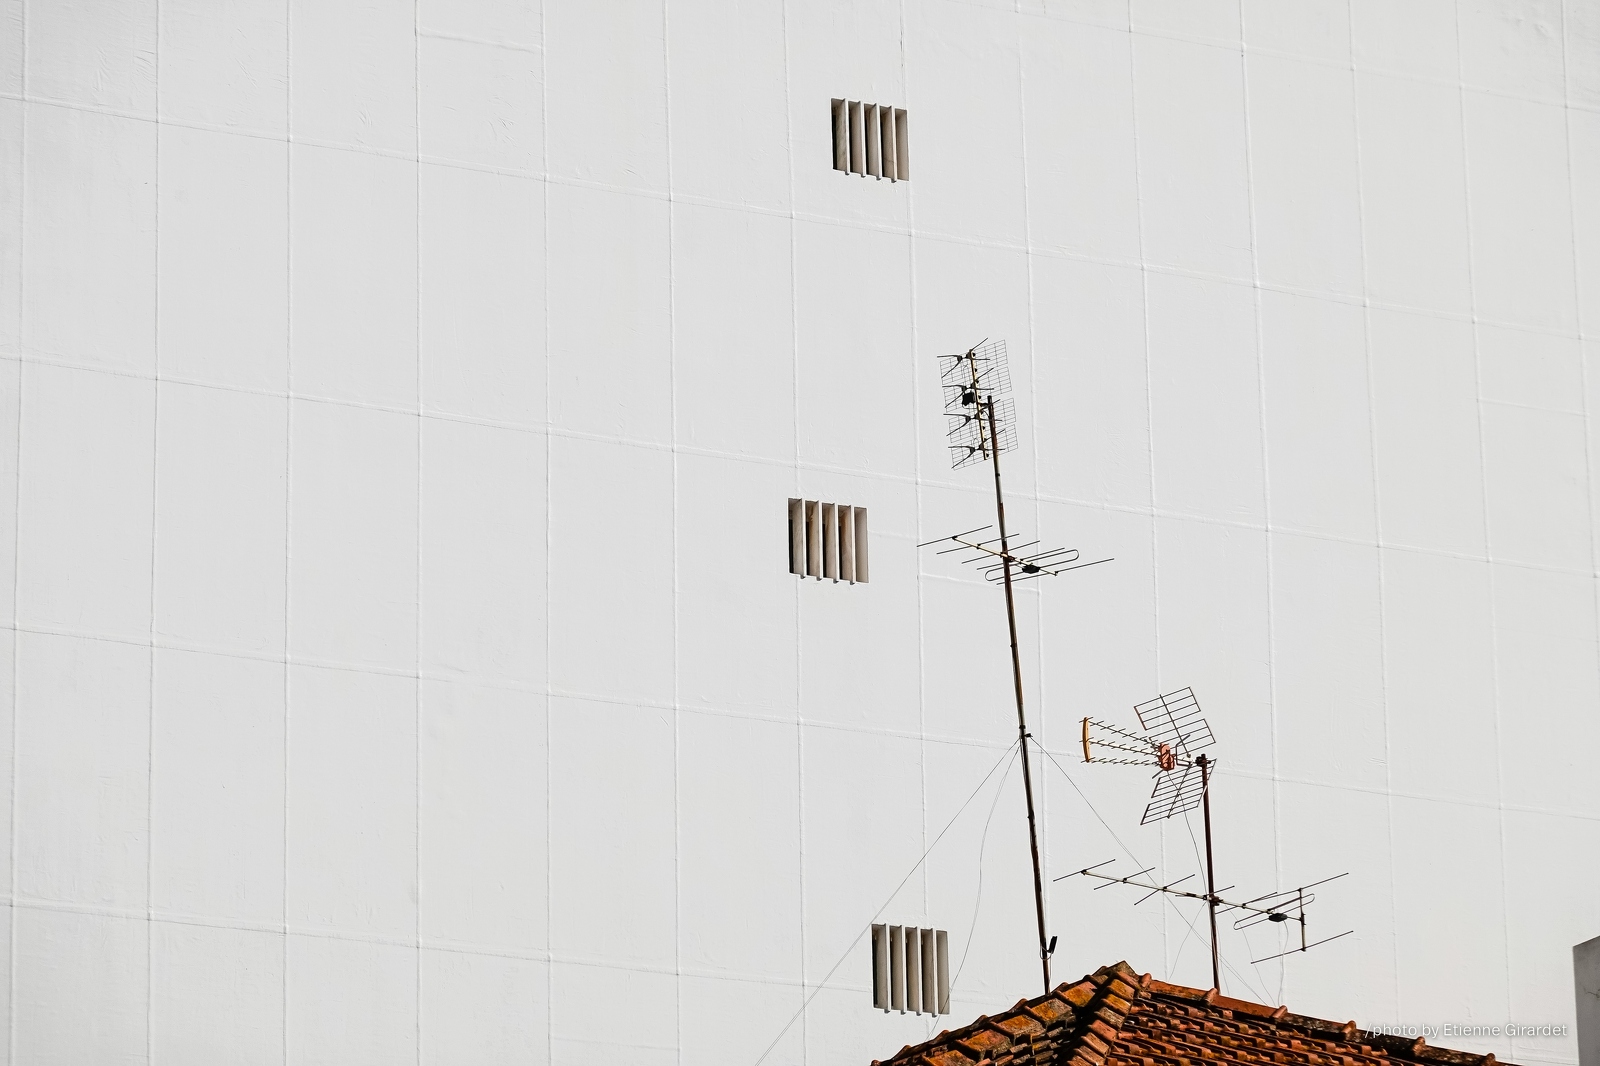 201810_22_RXX1807-white-wall-roof-tv-antenna-by-E-Girardet.jpg